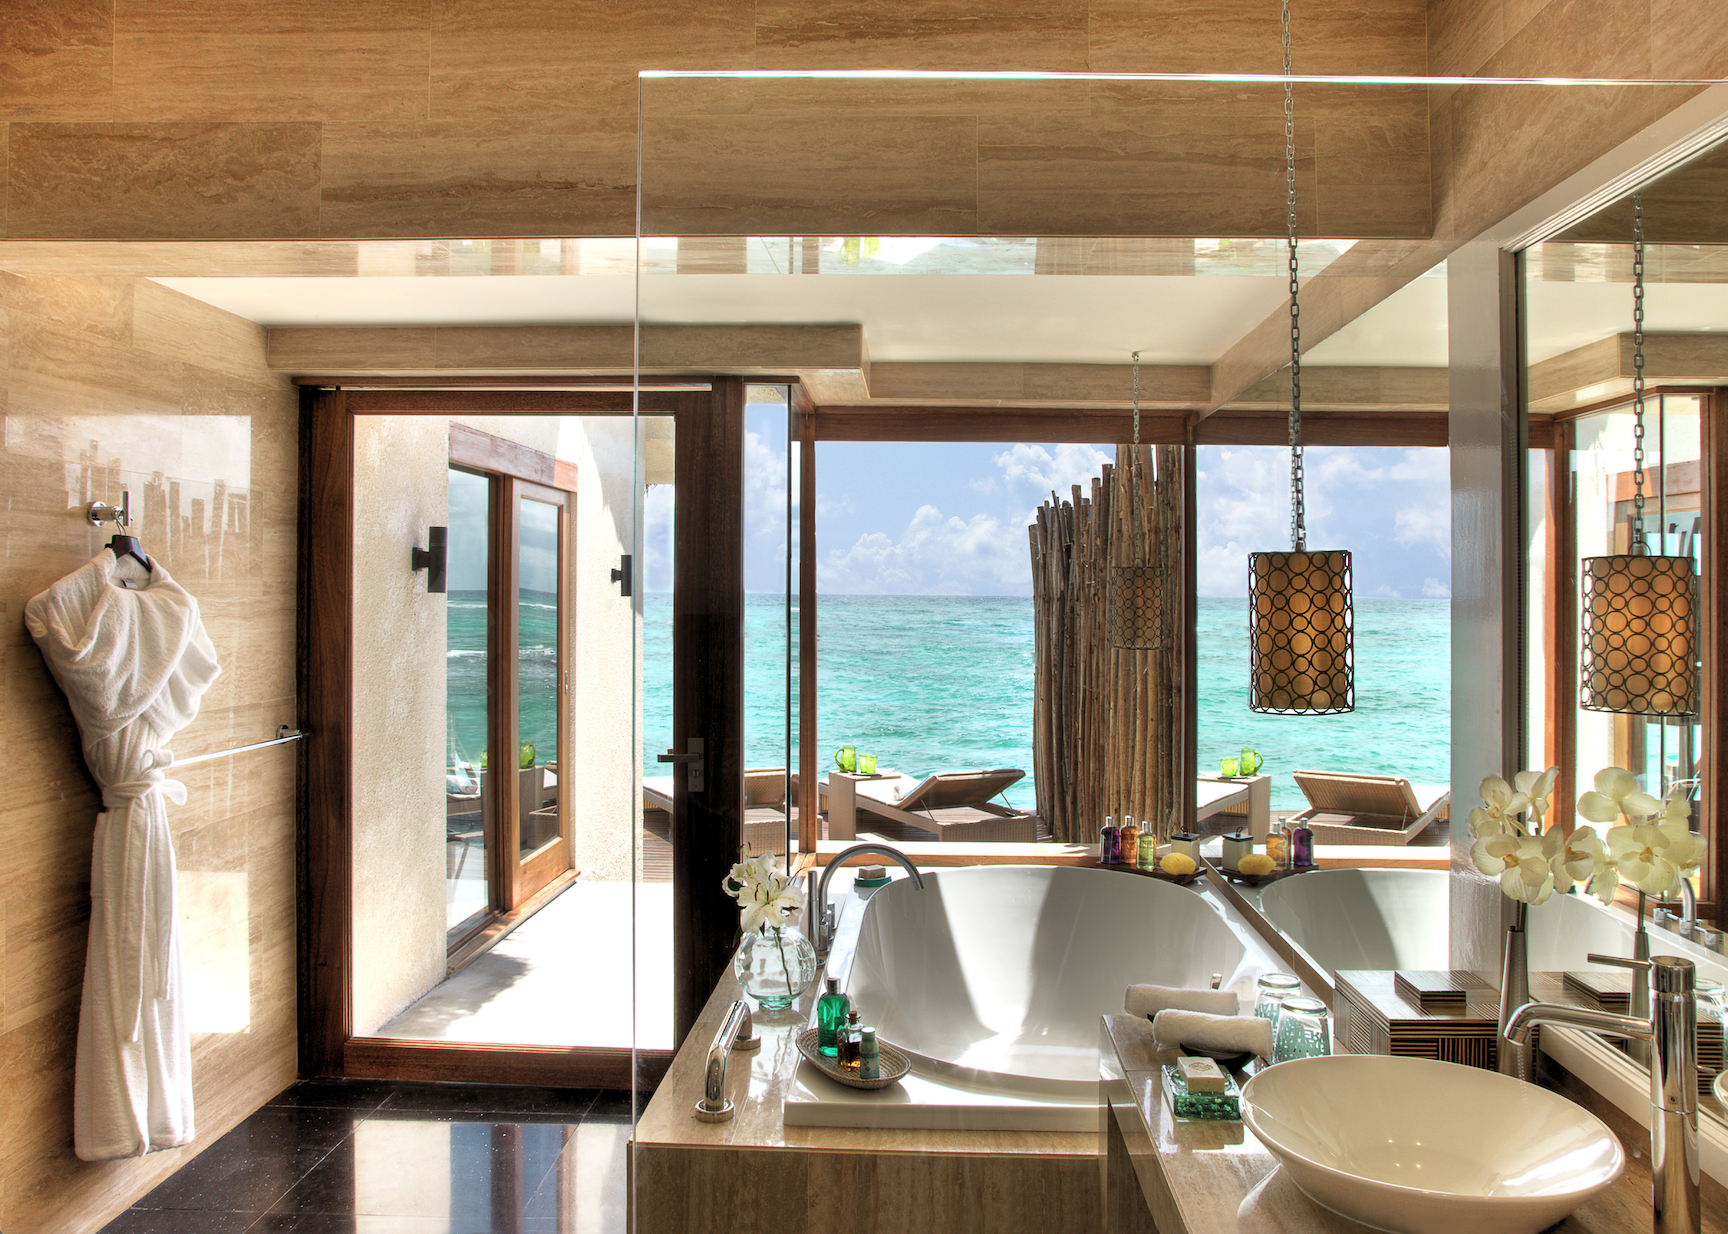   Bath with a view in a Water Villa (photo credit: Taj Hotels)   